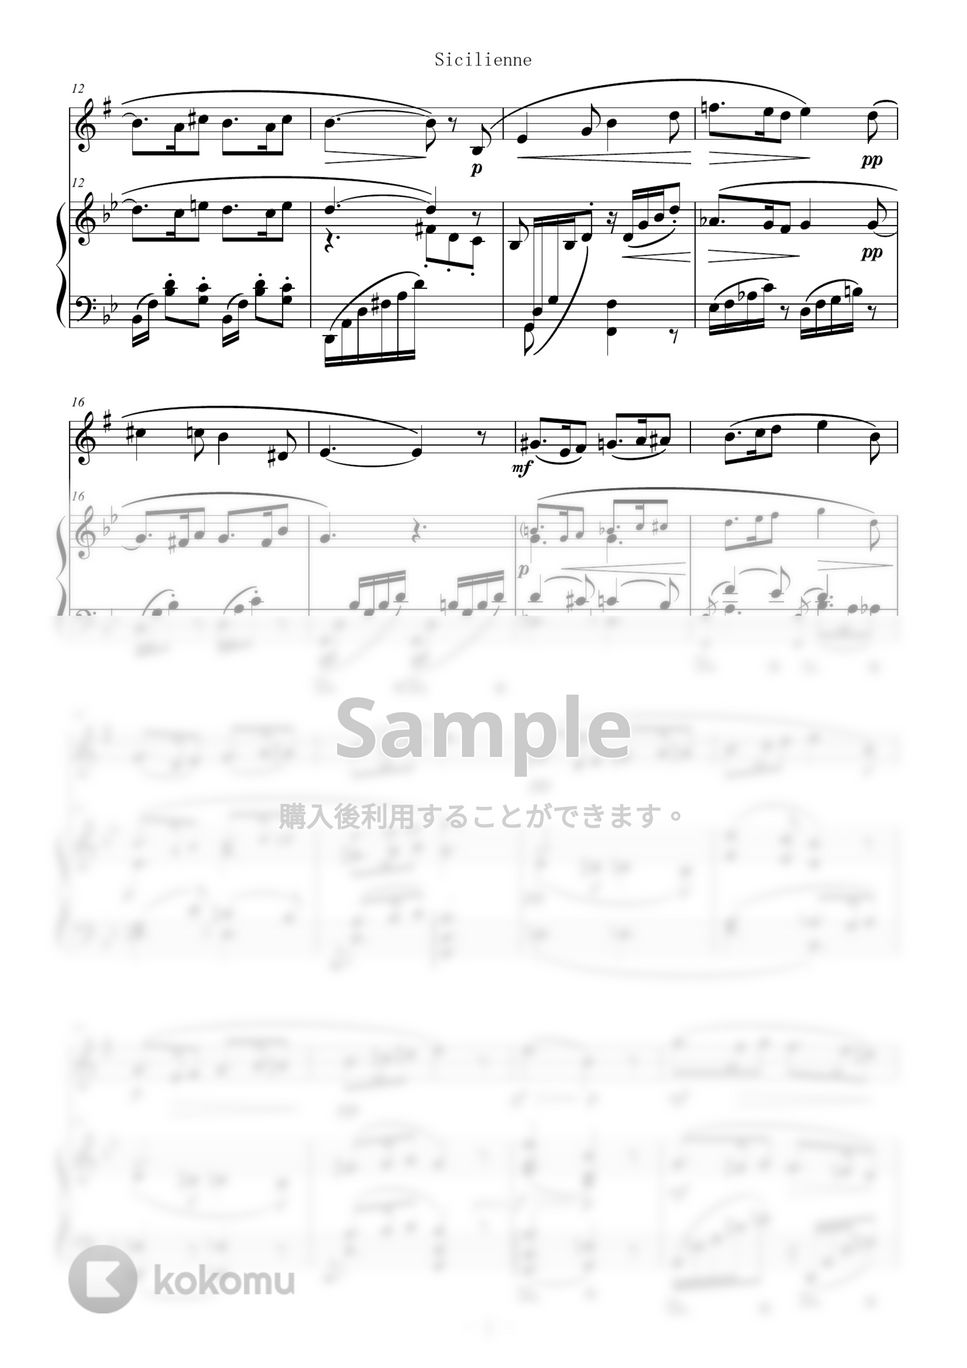 Gabriel Urbain Fauré - シシリエンヌ ( シチリアーノ ) for Baritone Sax and Piano (バリトンサックス/ピアノ/フォーレ/) by Zoe